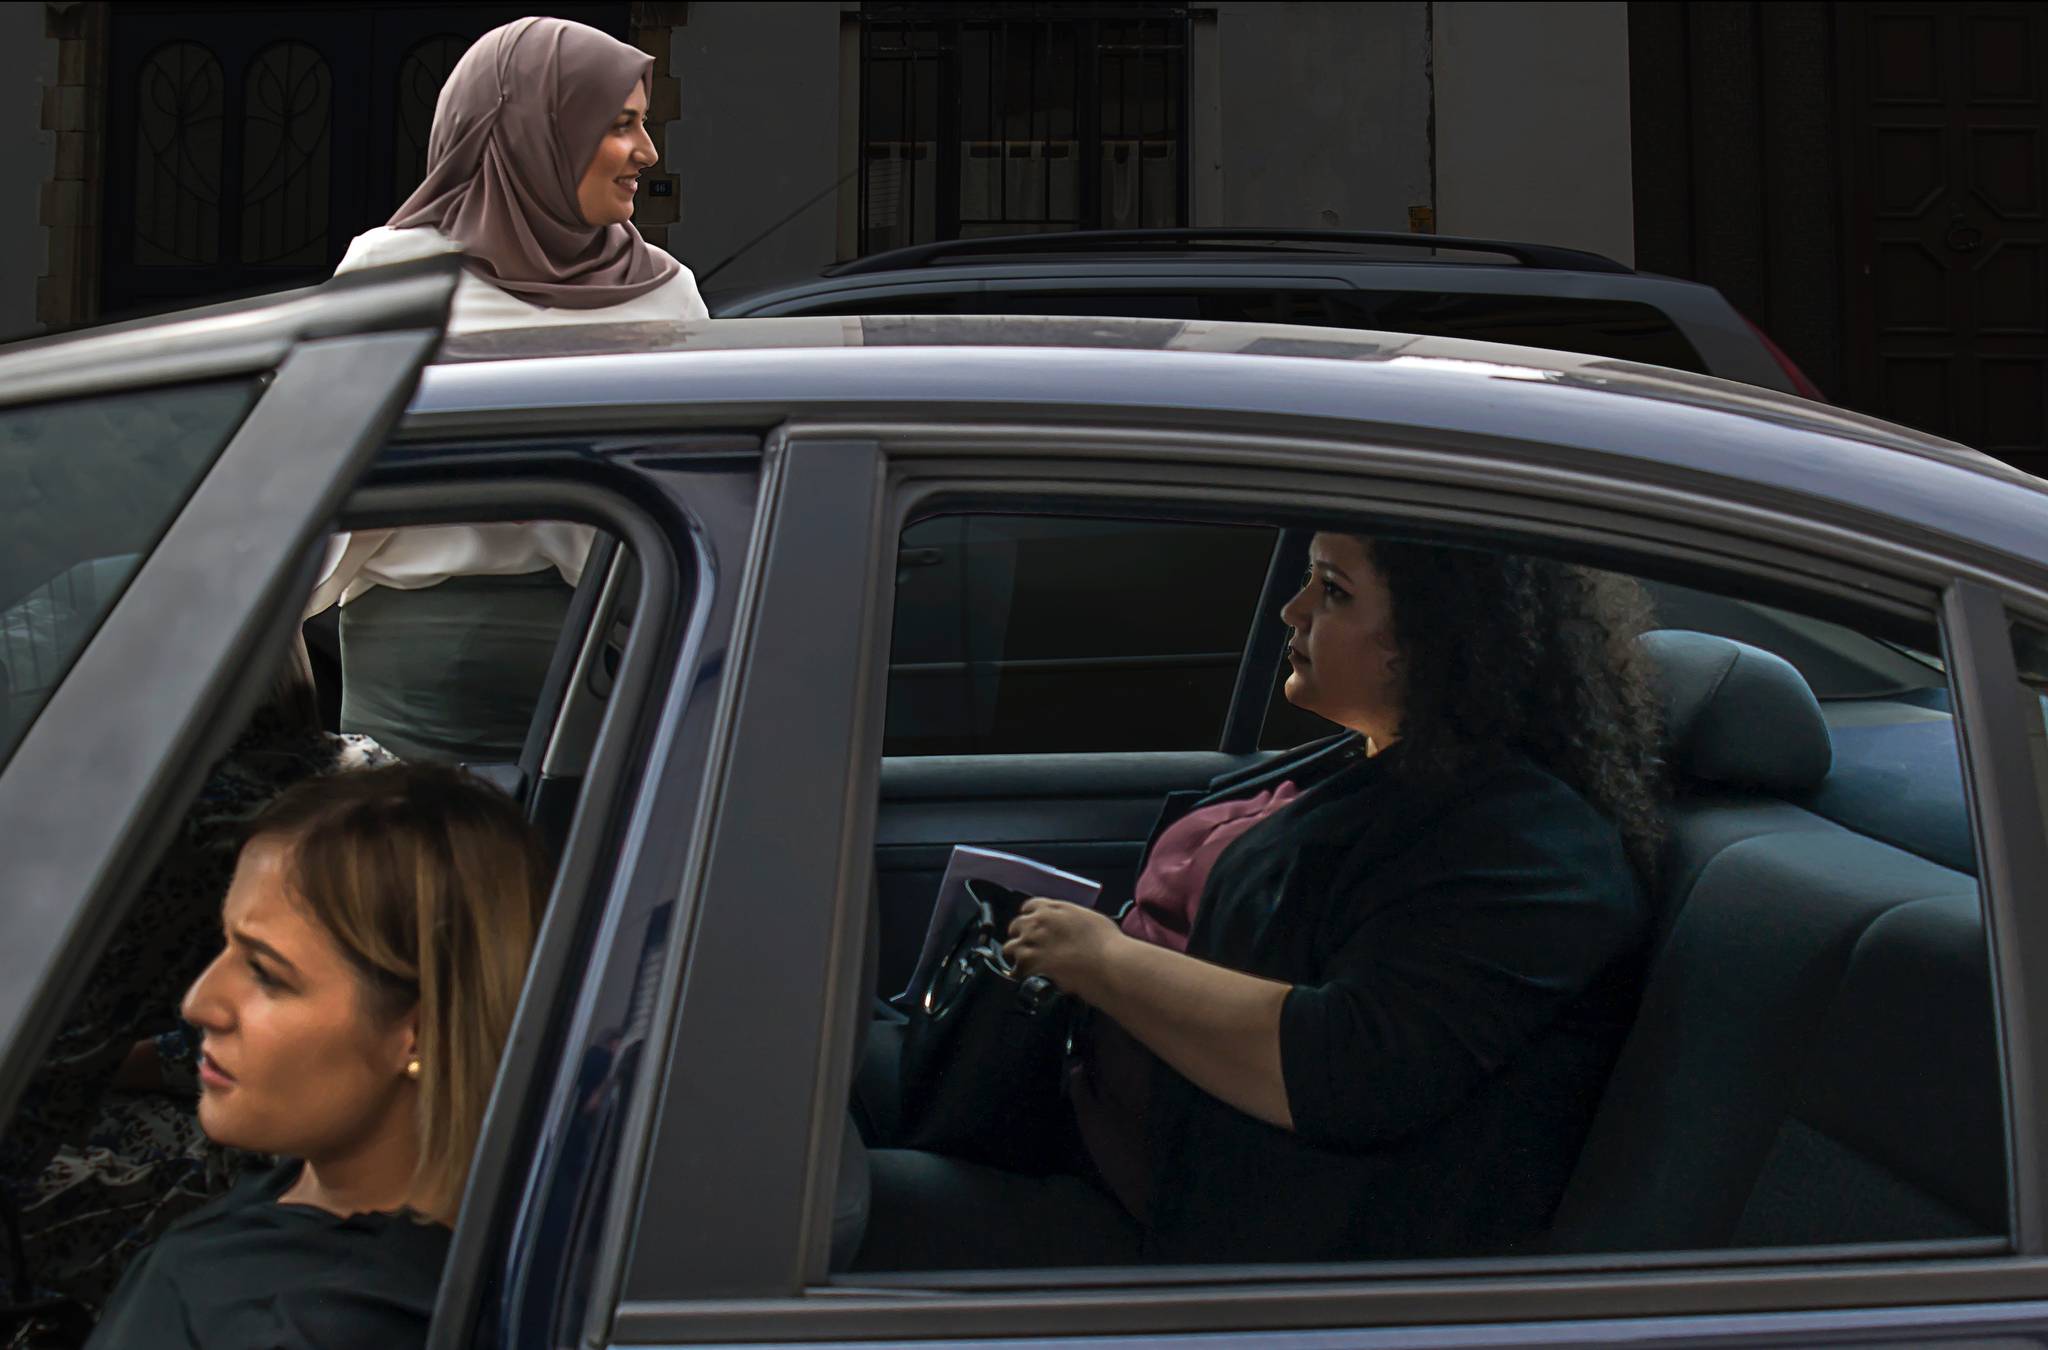 Hiyacar: Peer-to-peer car sharing for Londoners